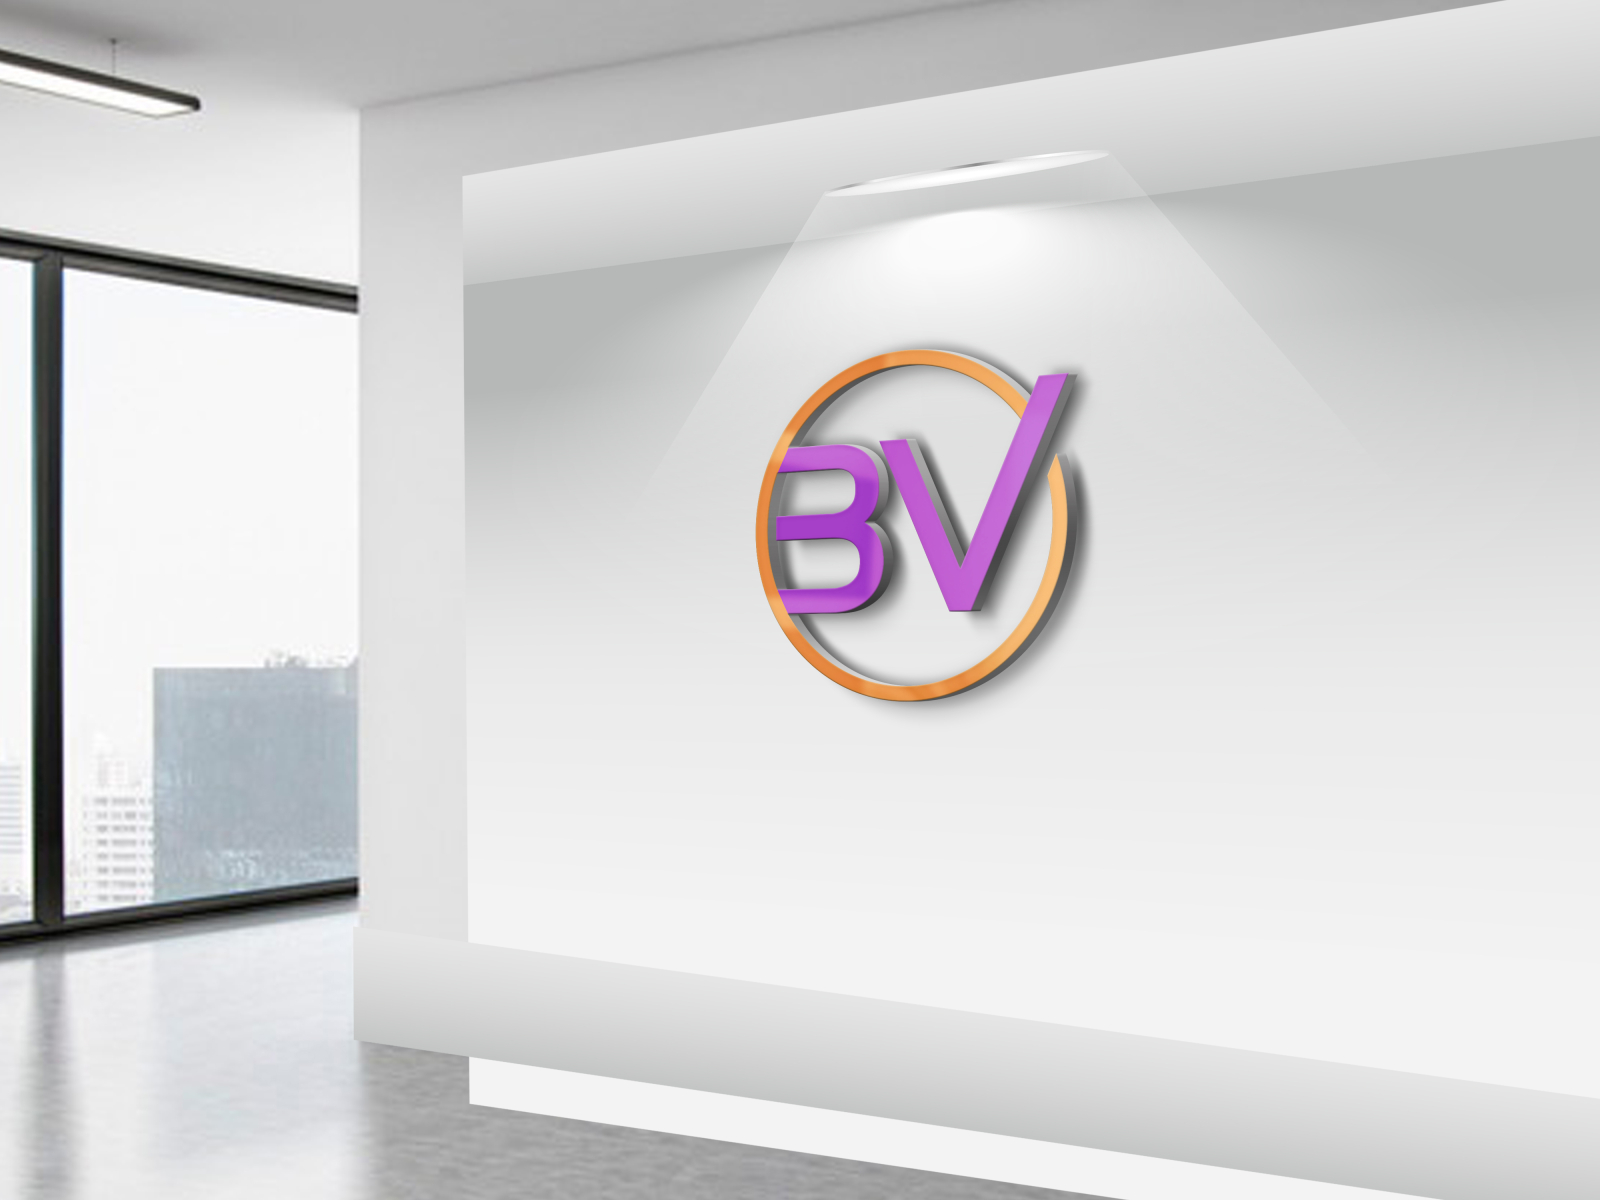 My personal logo BV Design by BlinVarfi on DeviantArt